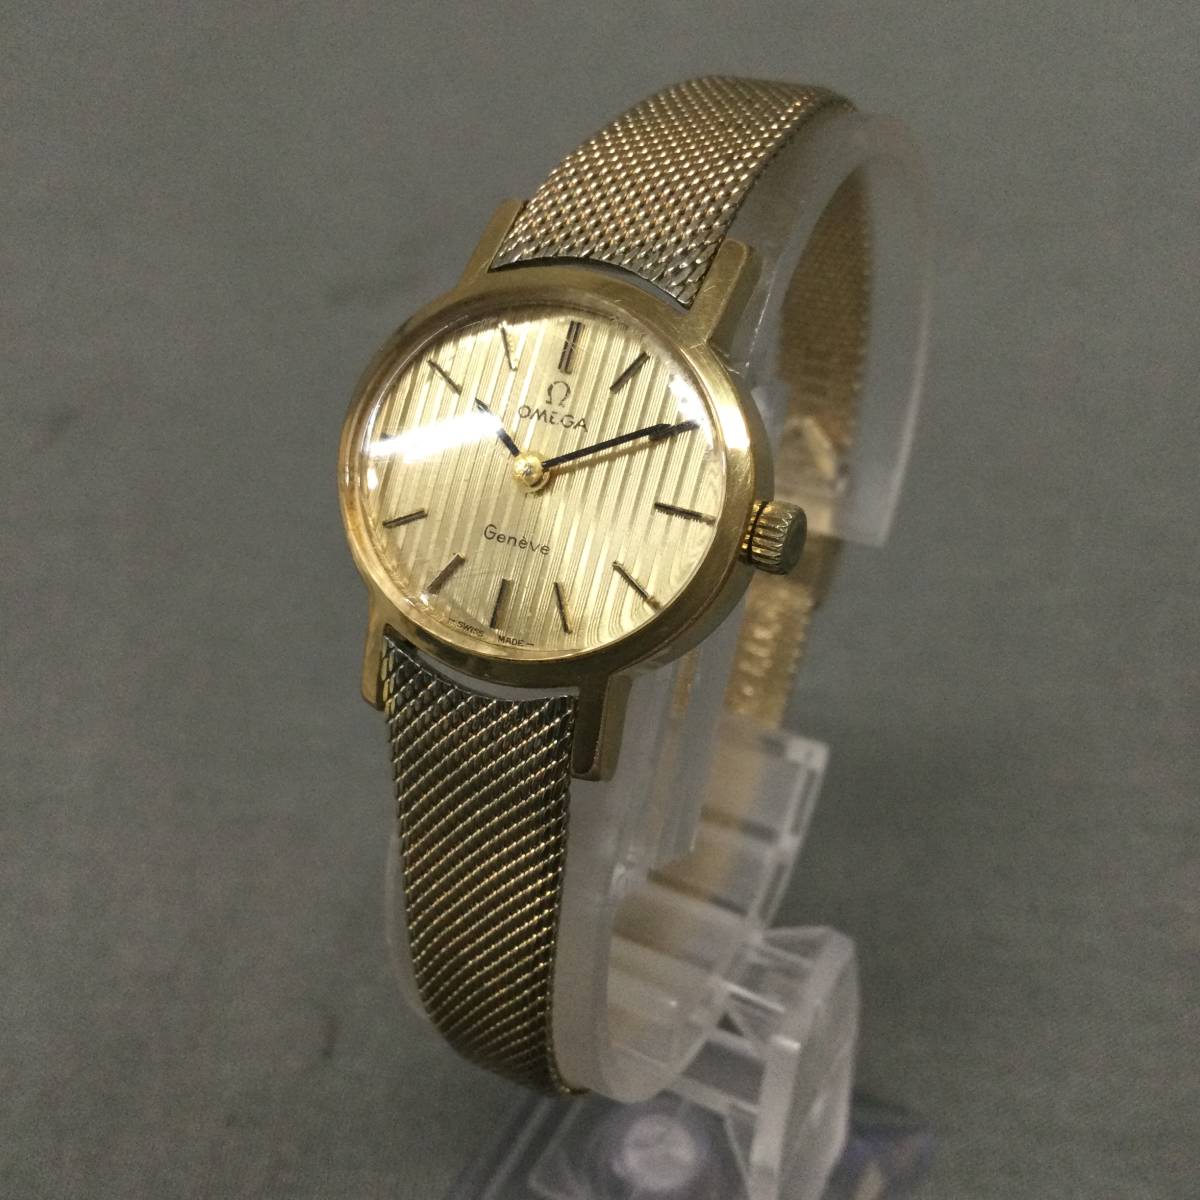 OMEGA(オメガ)Geneve ジュネーブ レディース 手巻 時計 ベルトなし 腕時計 激安単価で